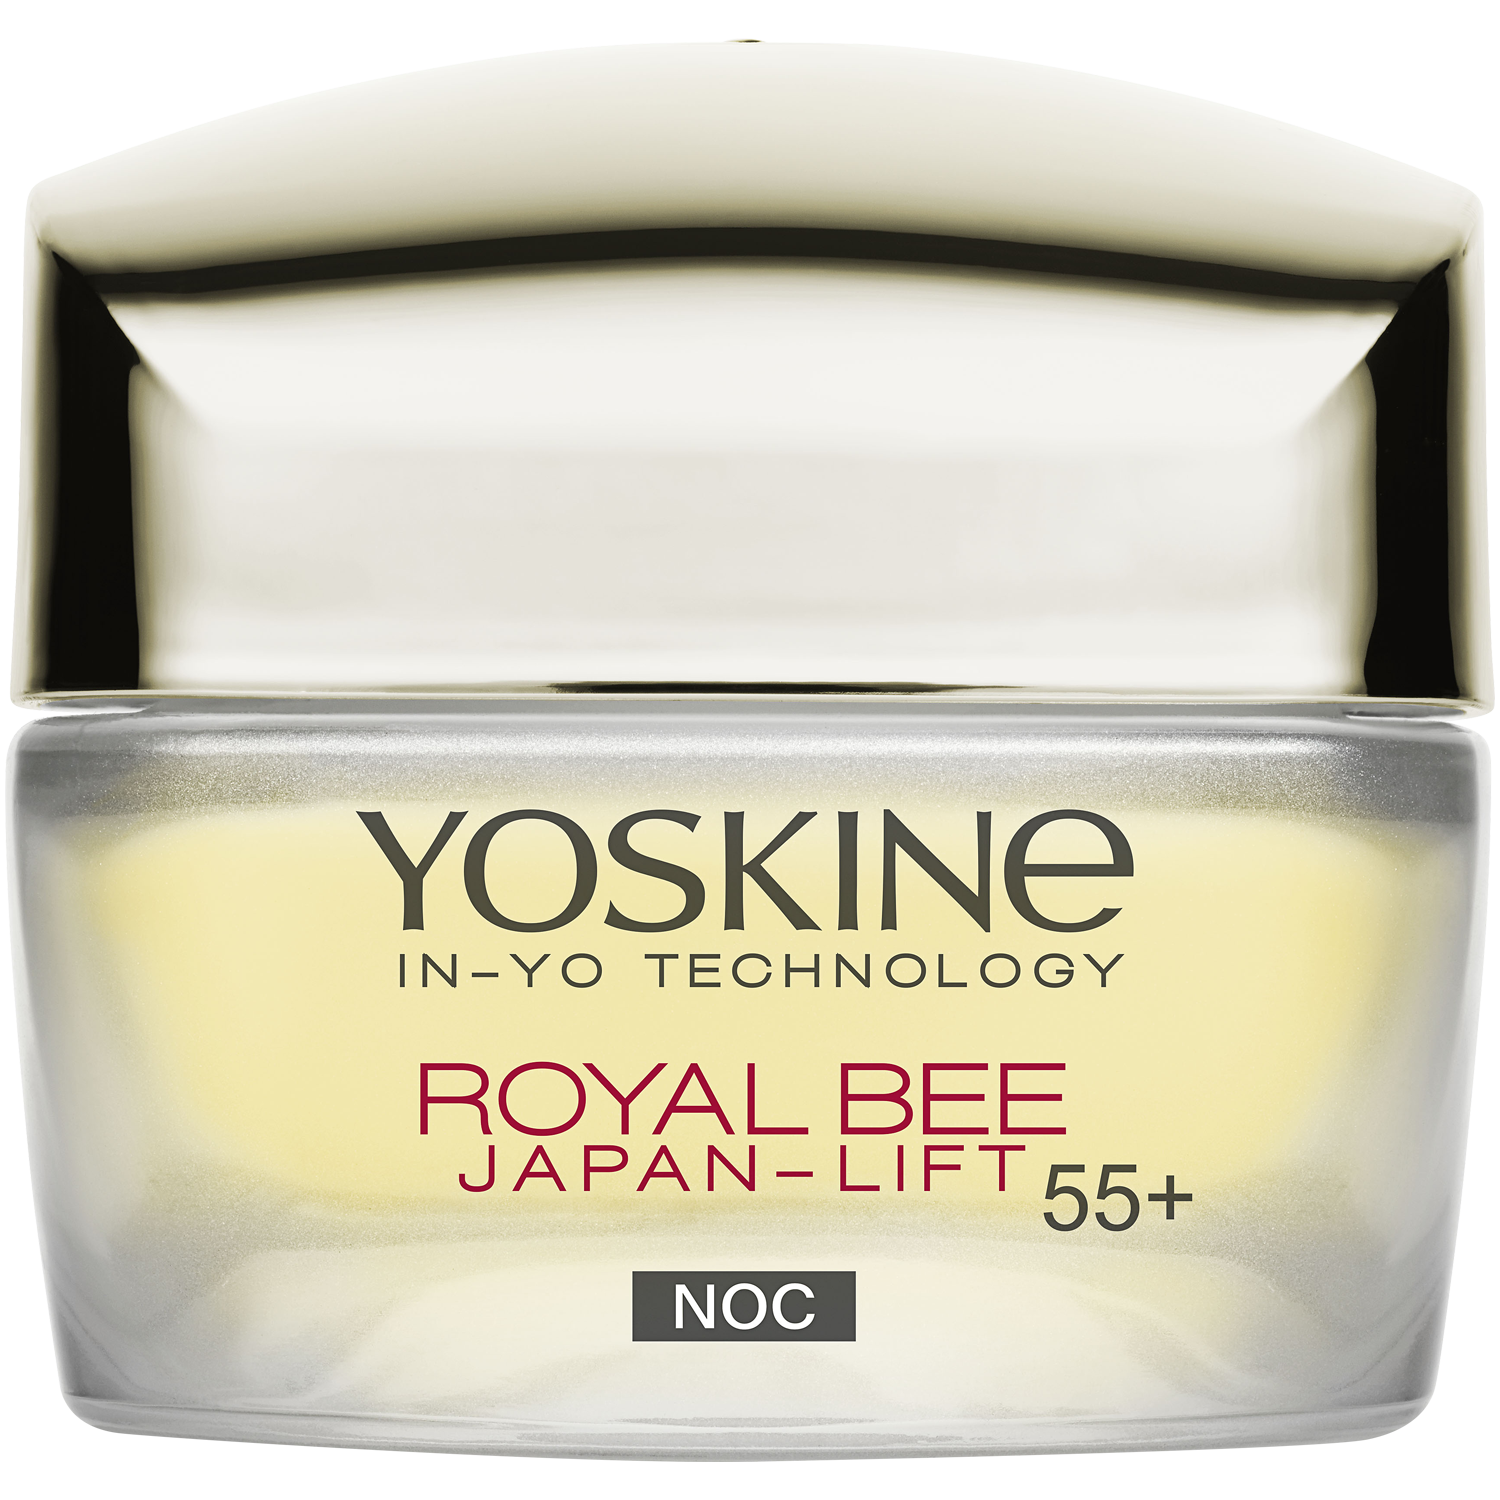 Yoskine Royal Bee Japan Lift Ночной крем для лица 55+, 50 мл